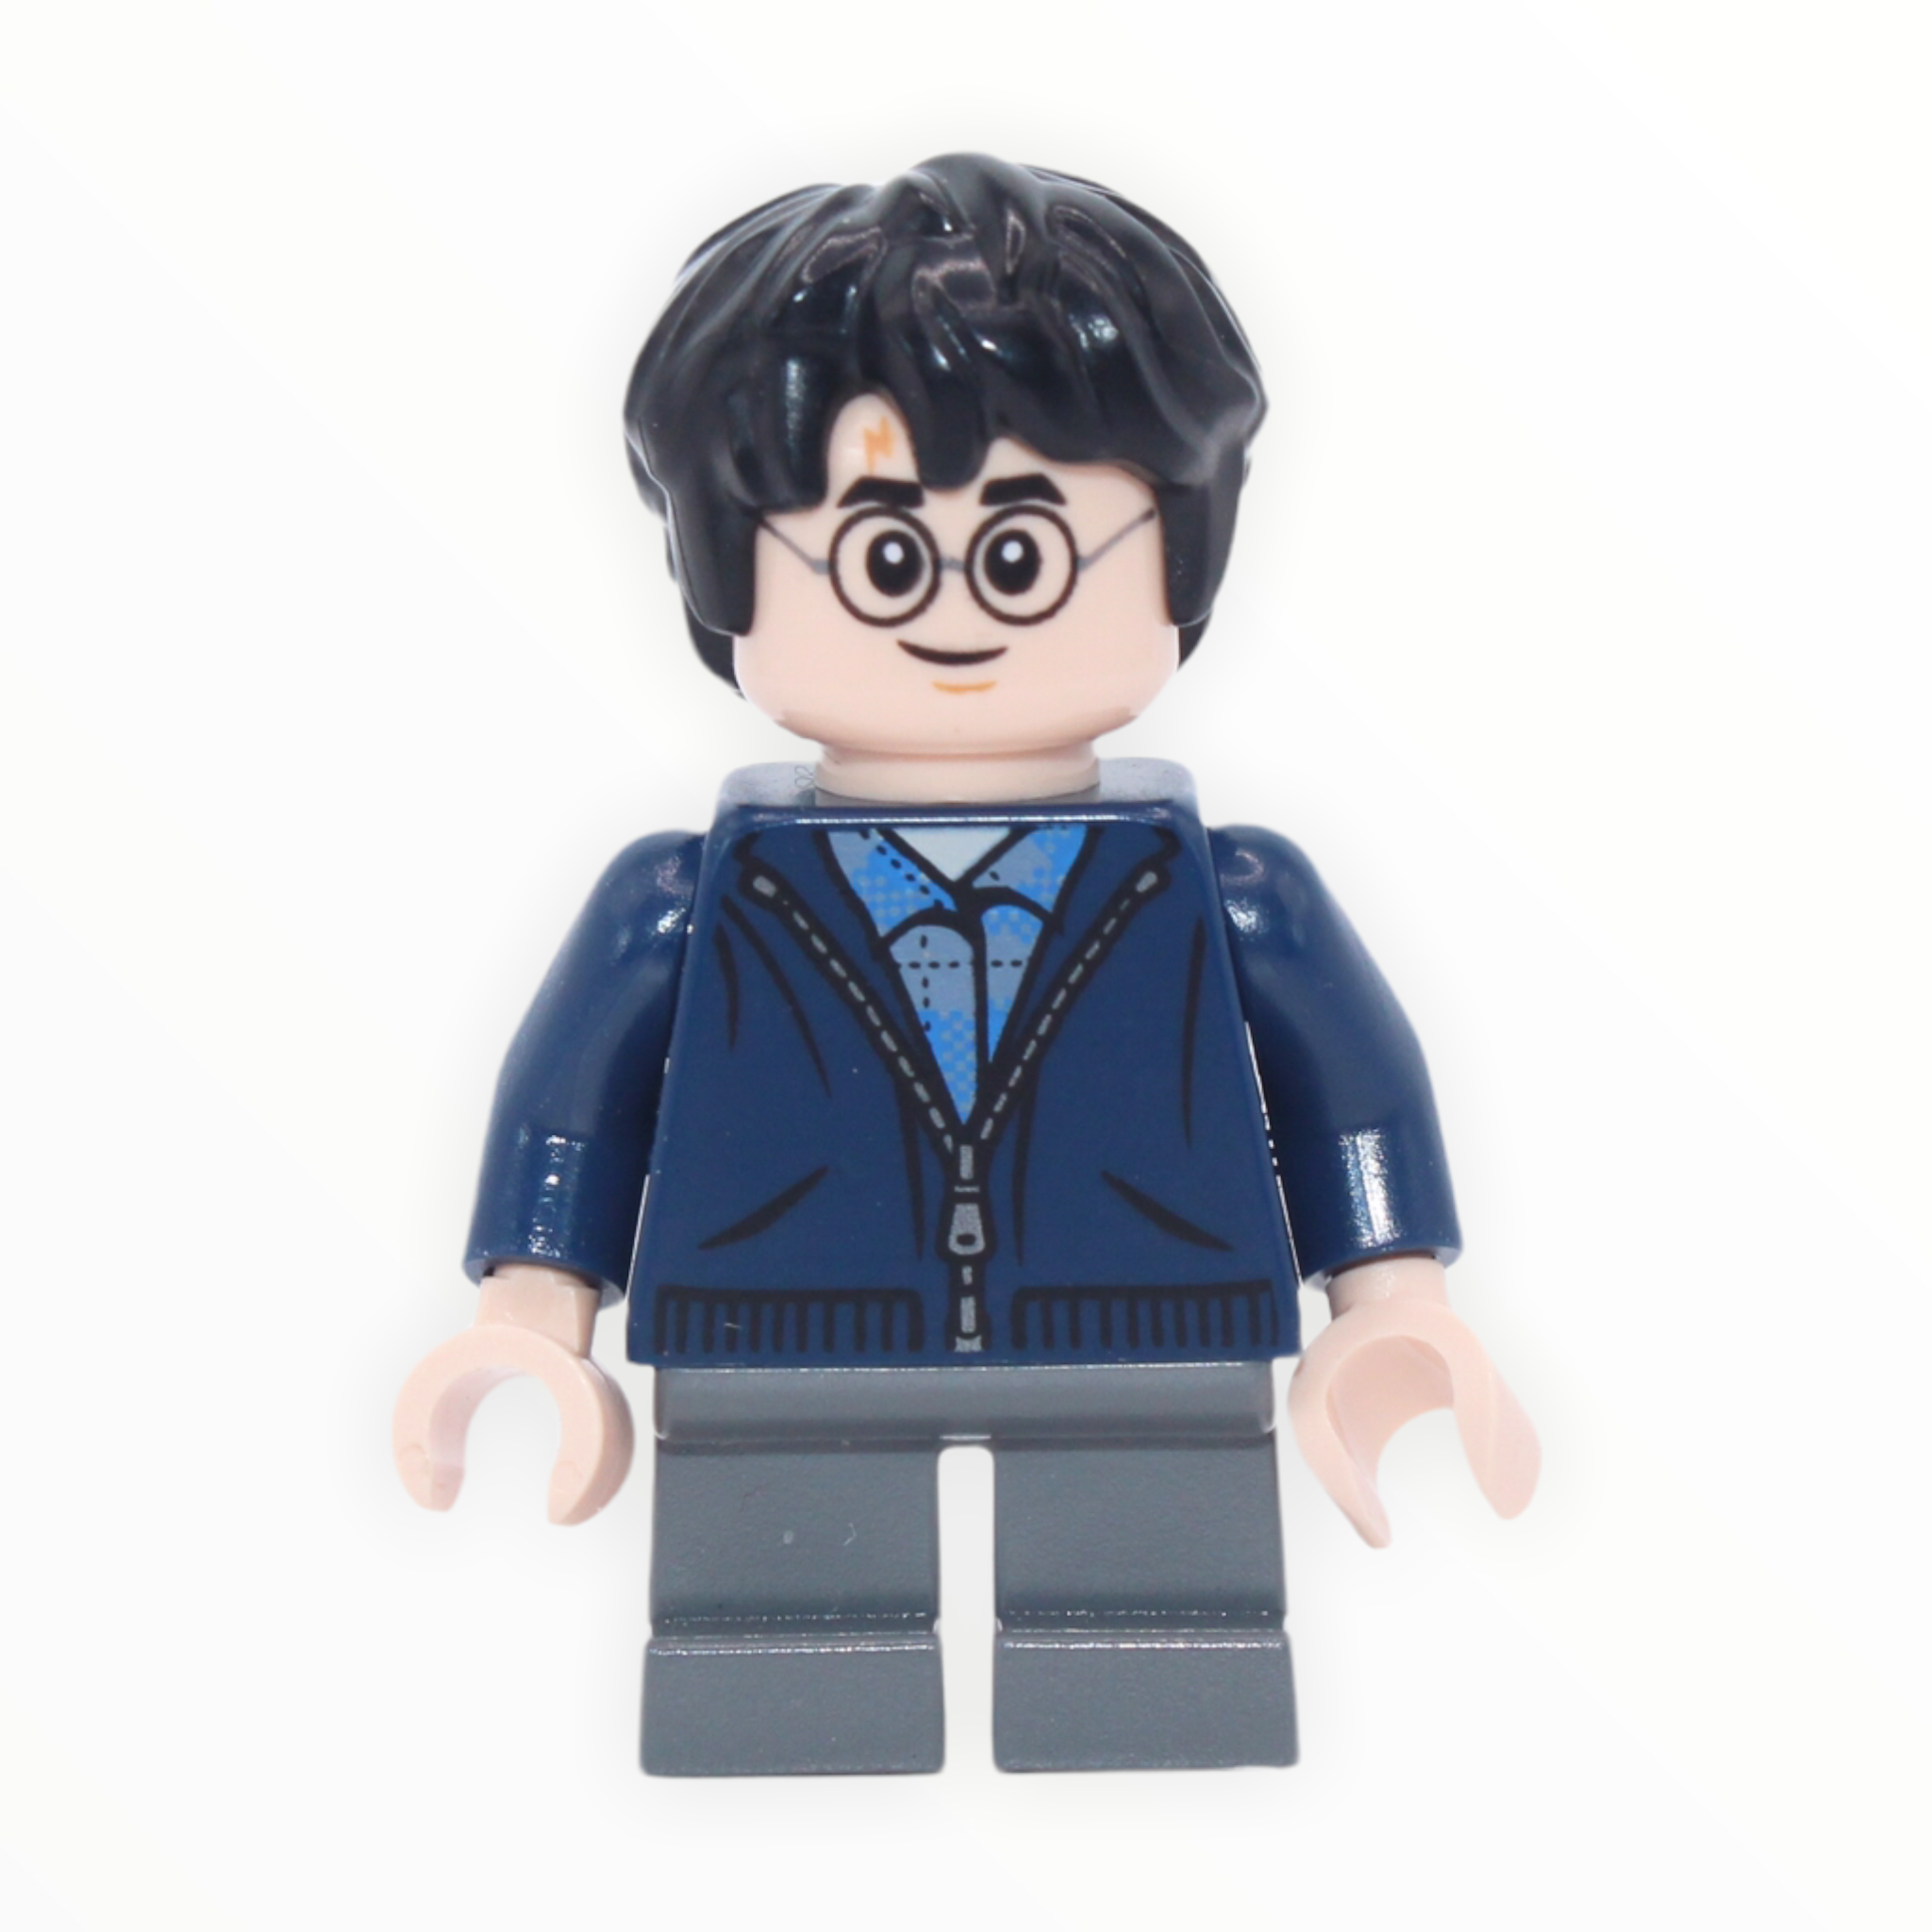 Harry Potter (dark blue zip up jacket, short legs)